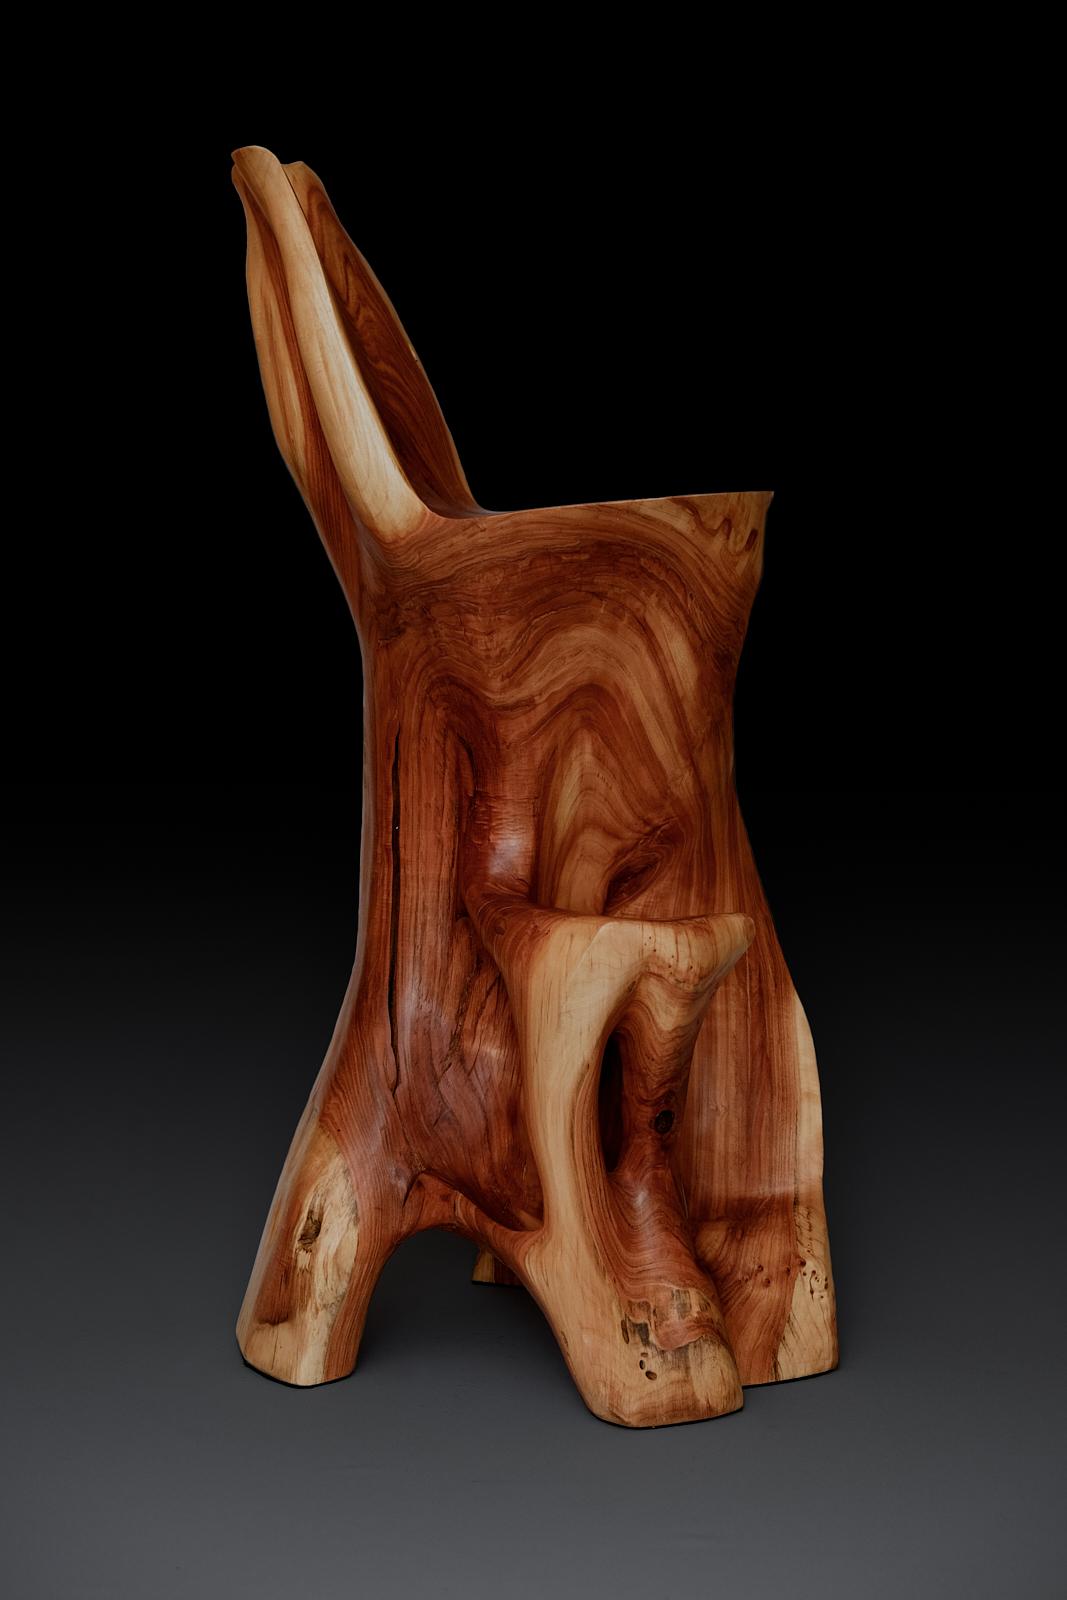 Makha, Solid Wood Sculptural Bar Chair, Original Contemporary Design, Logniture For Sale 4